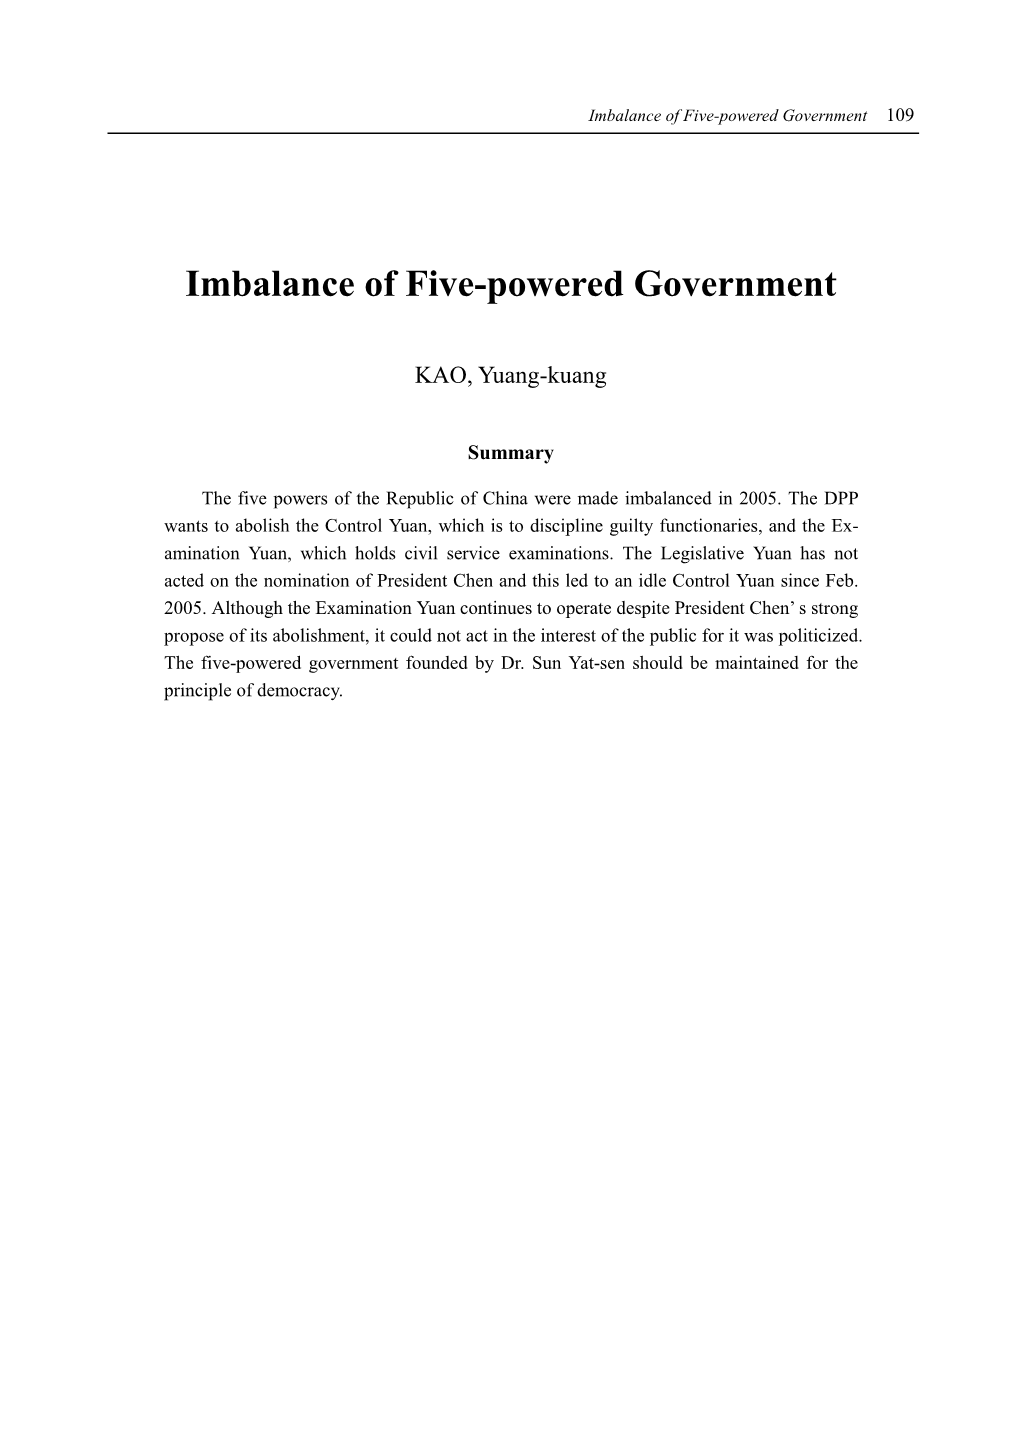 Imbalance of Five-Powered Government 109